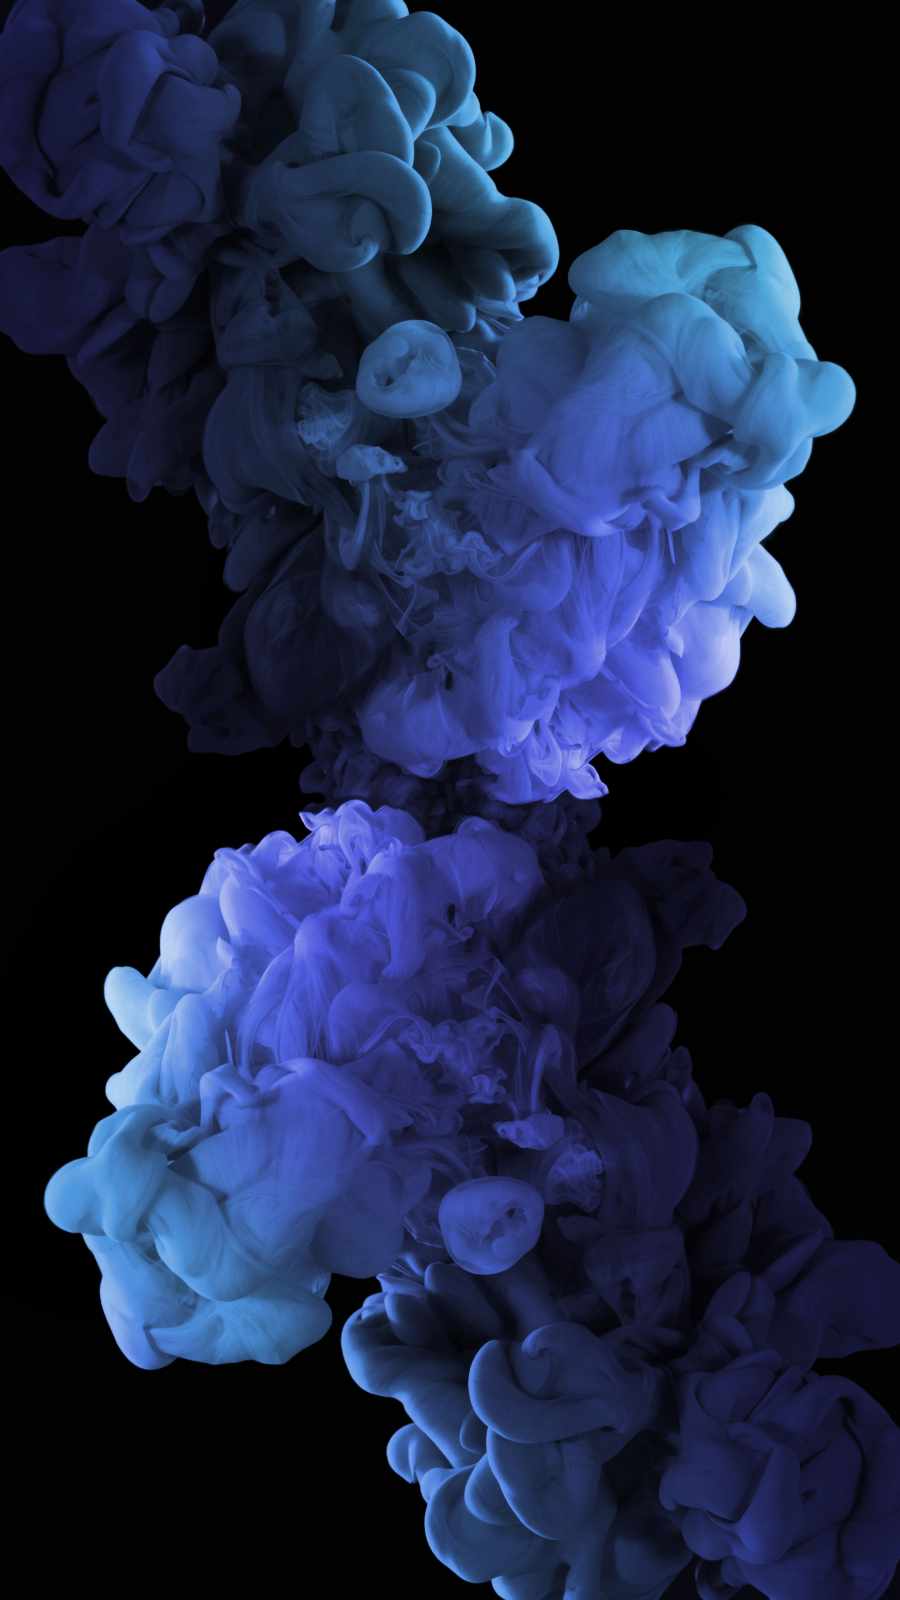 Smoke Clouds iPhone Wallpaper